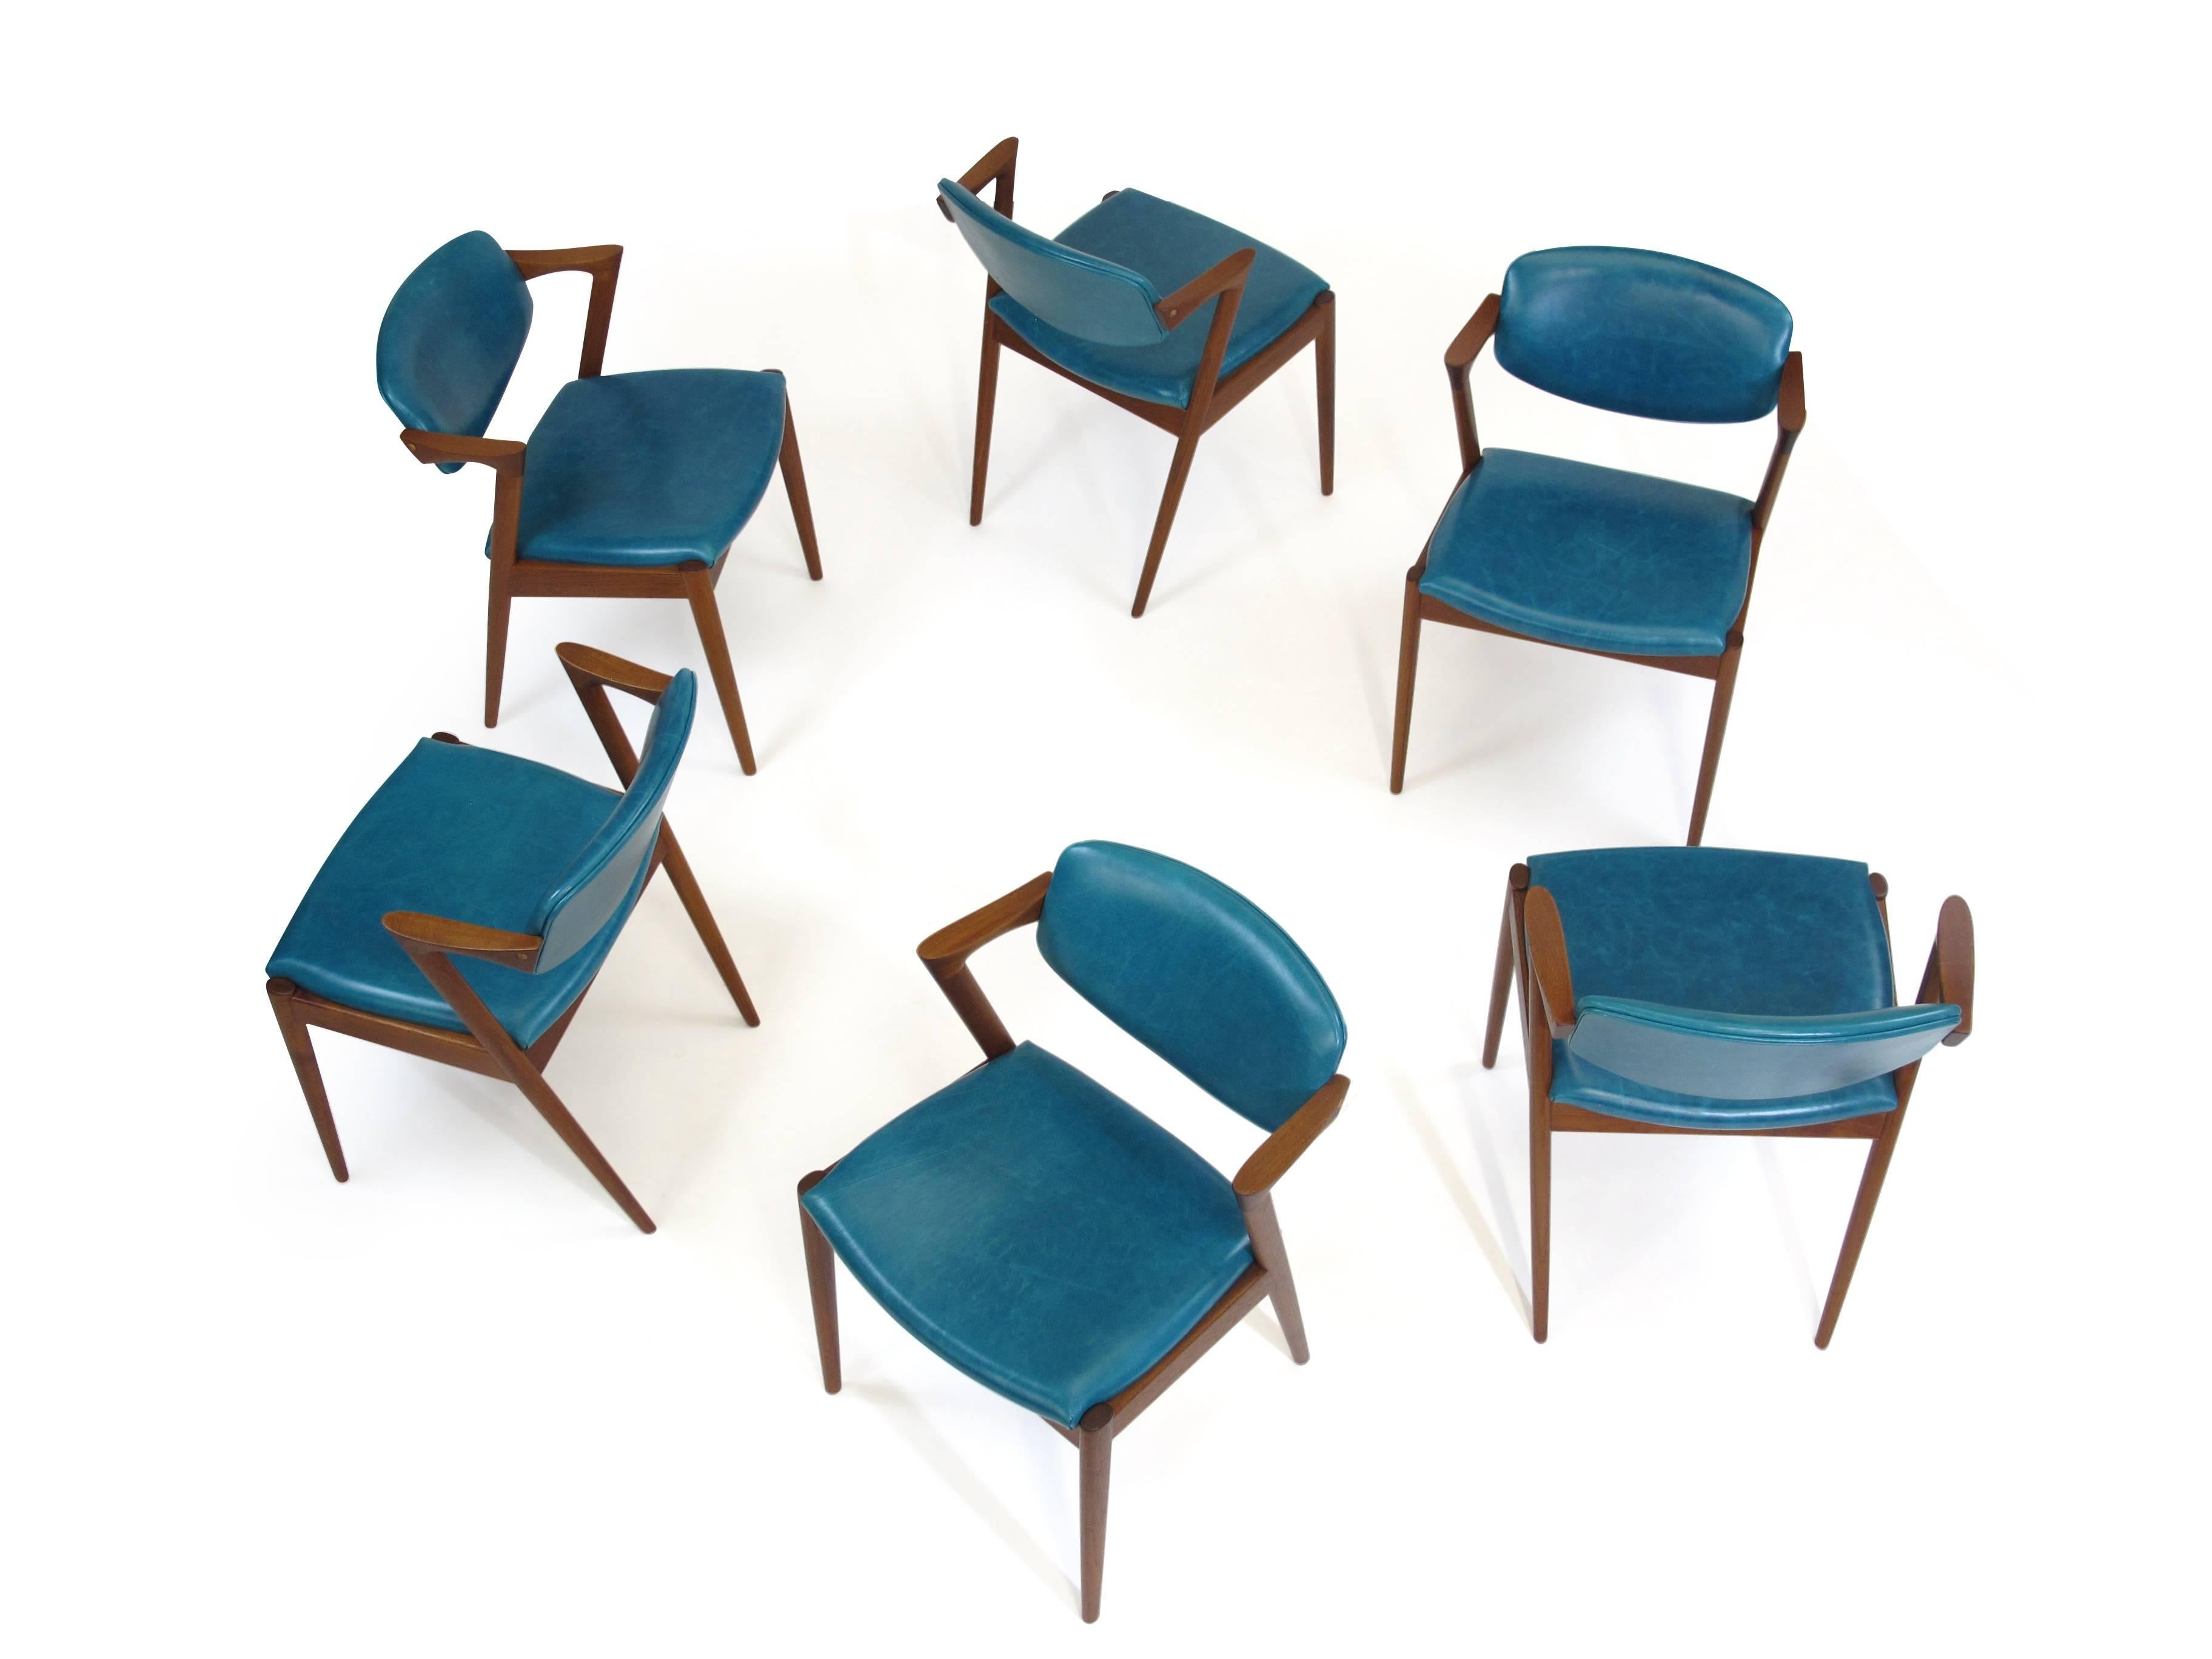 Six Kai Kristiansen Teak Danish Dining Chairs in Turquoise Leather, 20 Available 1